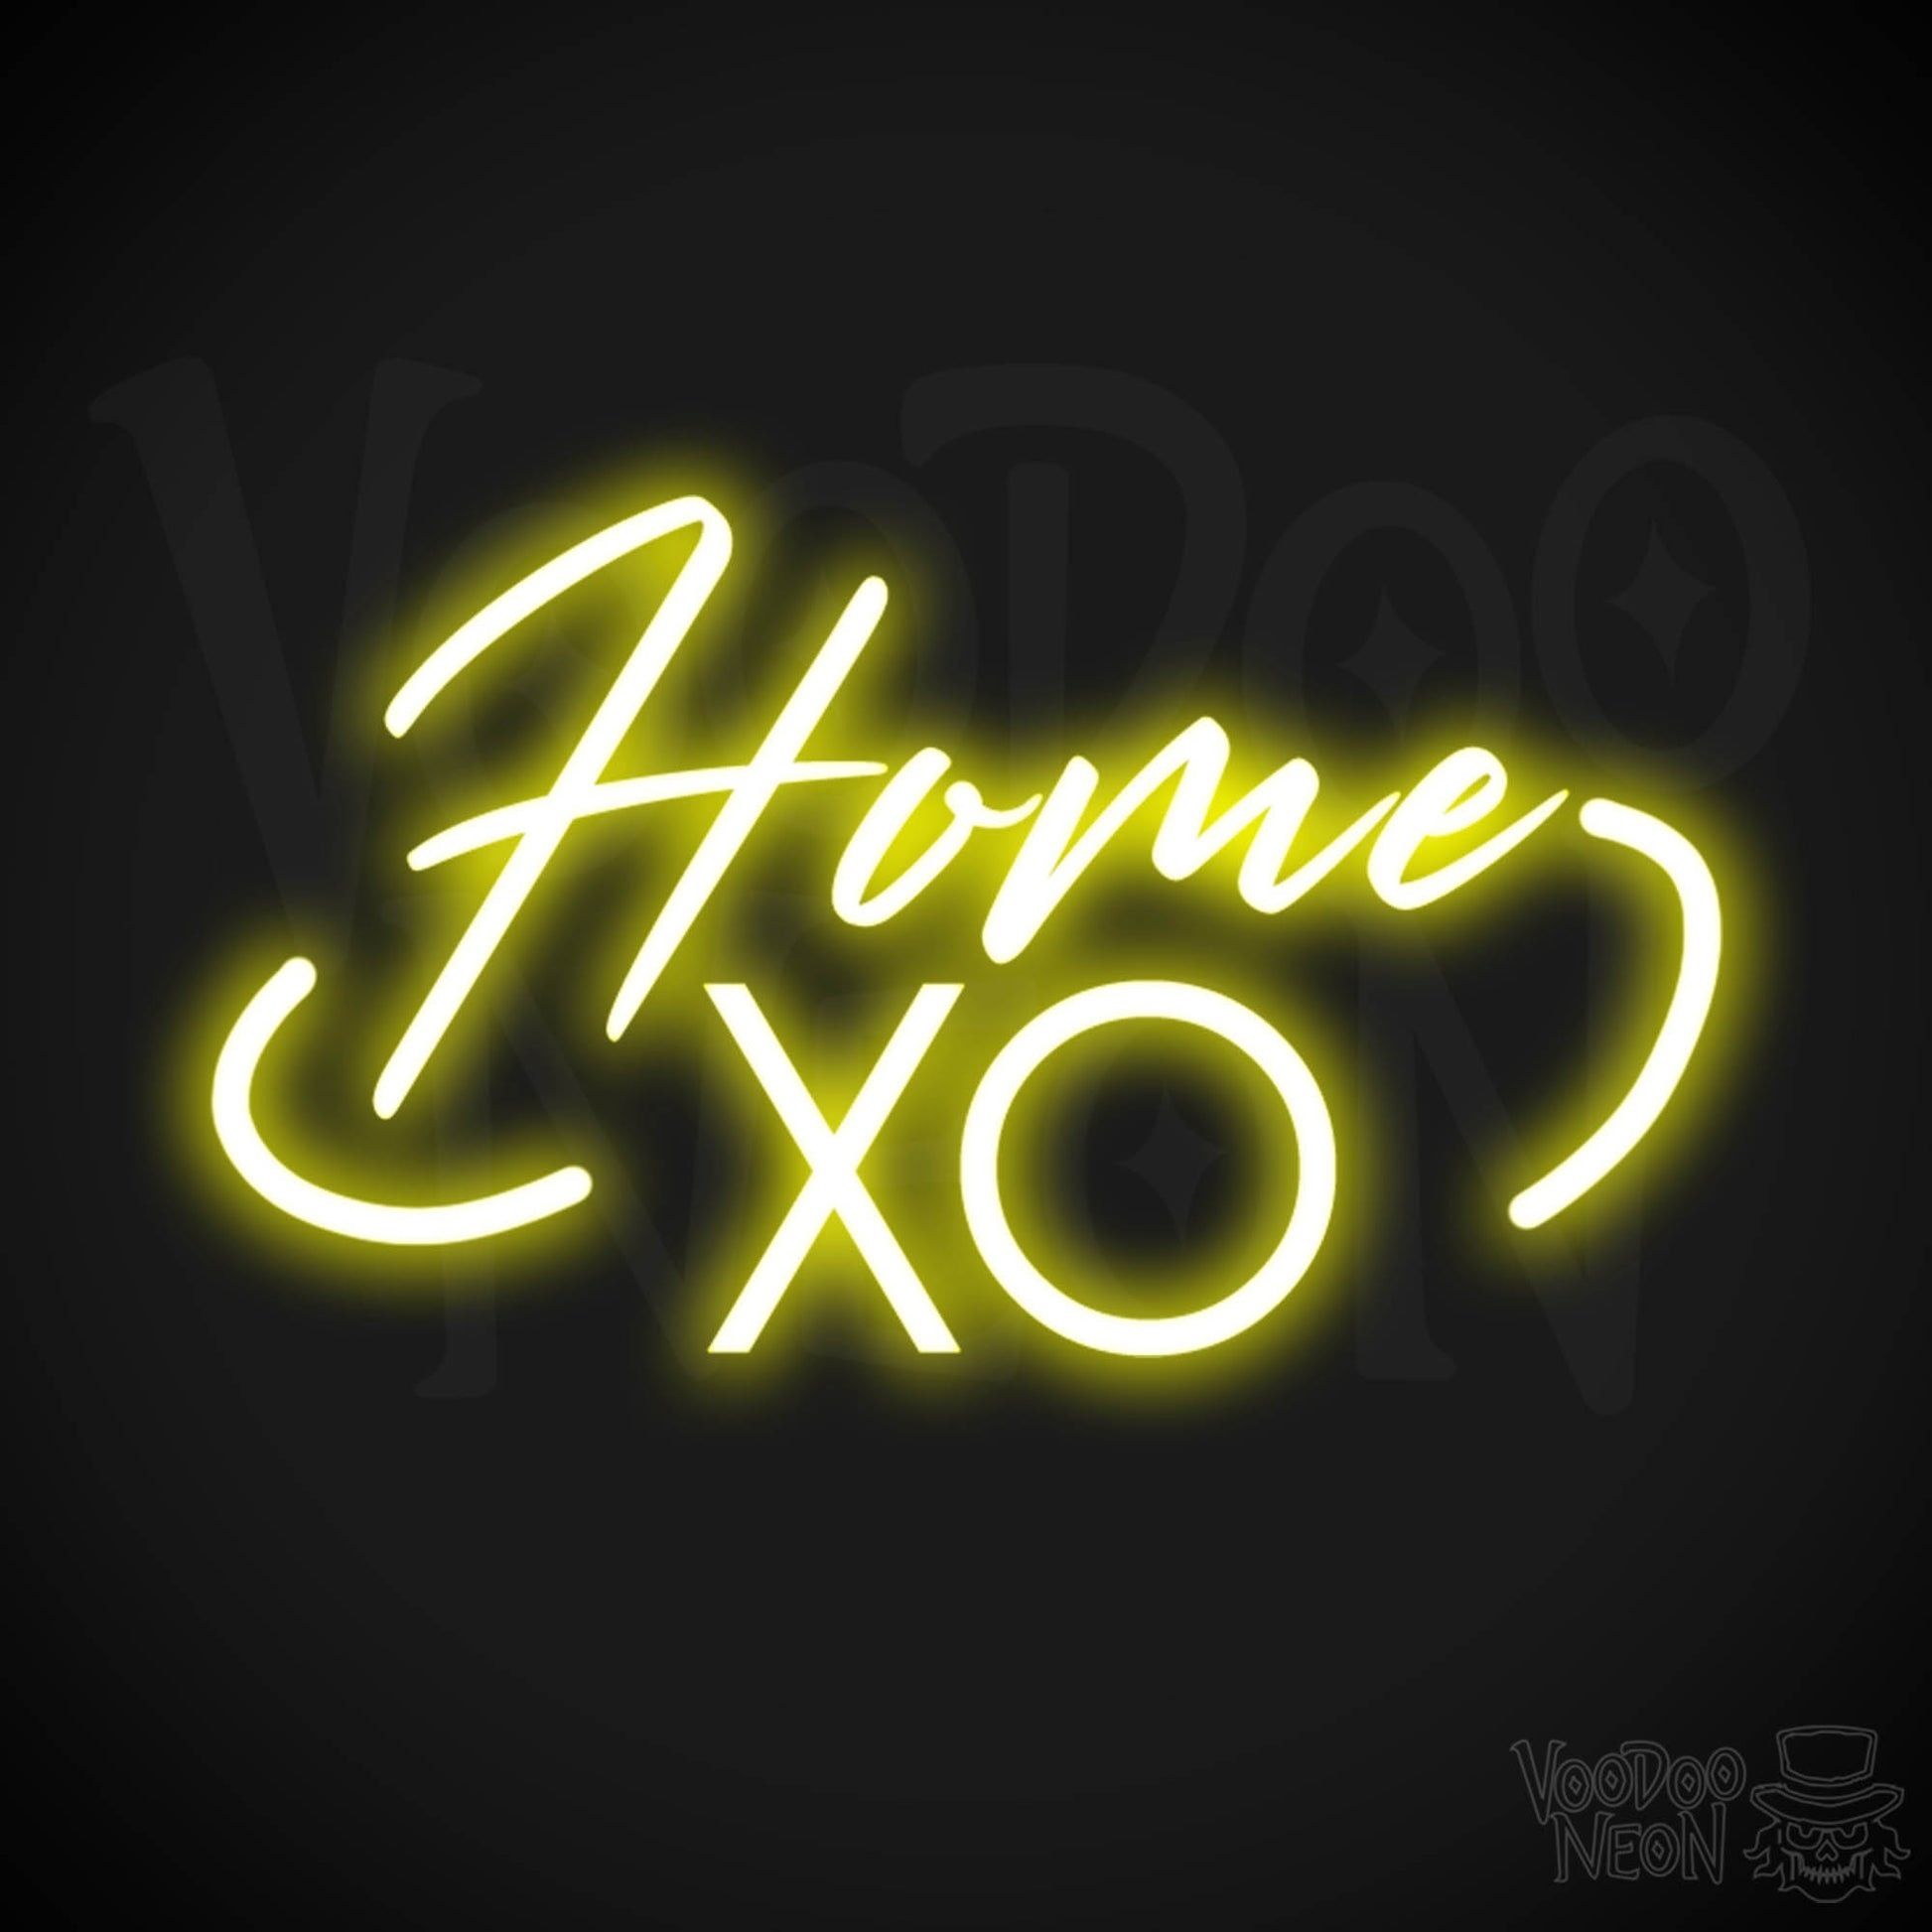 Home XO Neon Sign - Neon Home XO Sign - Wall Art - Color Yellow